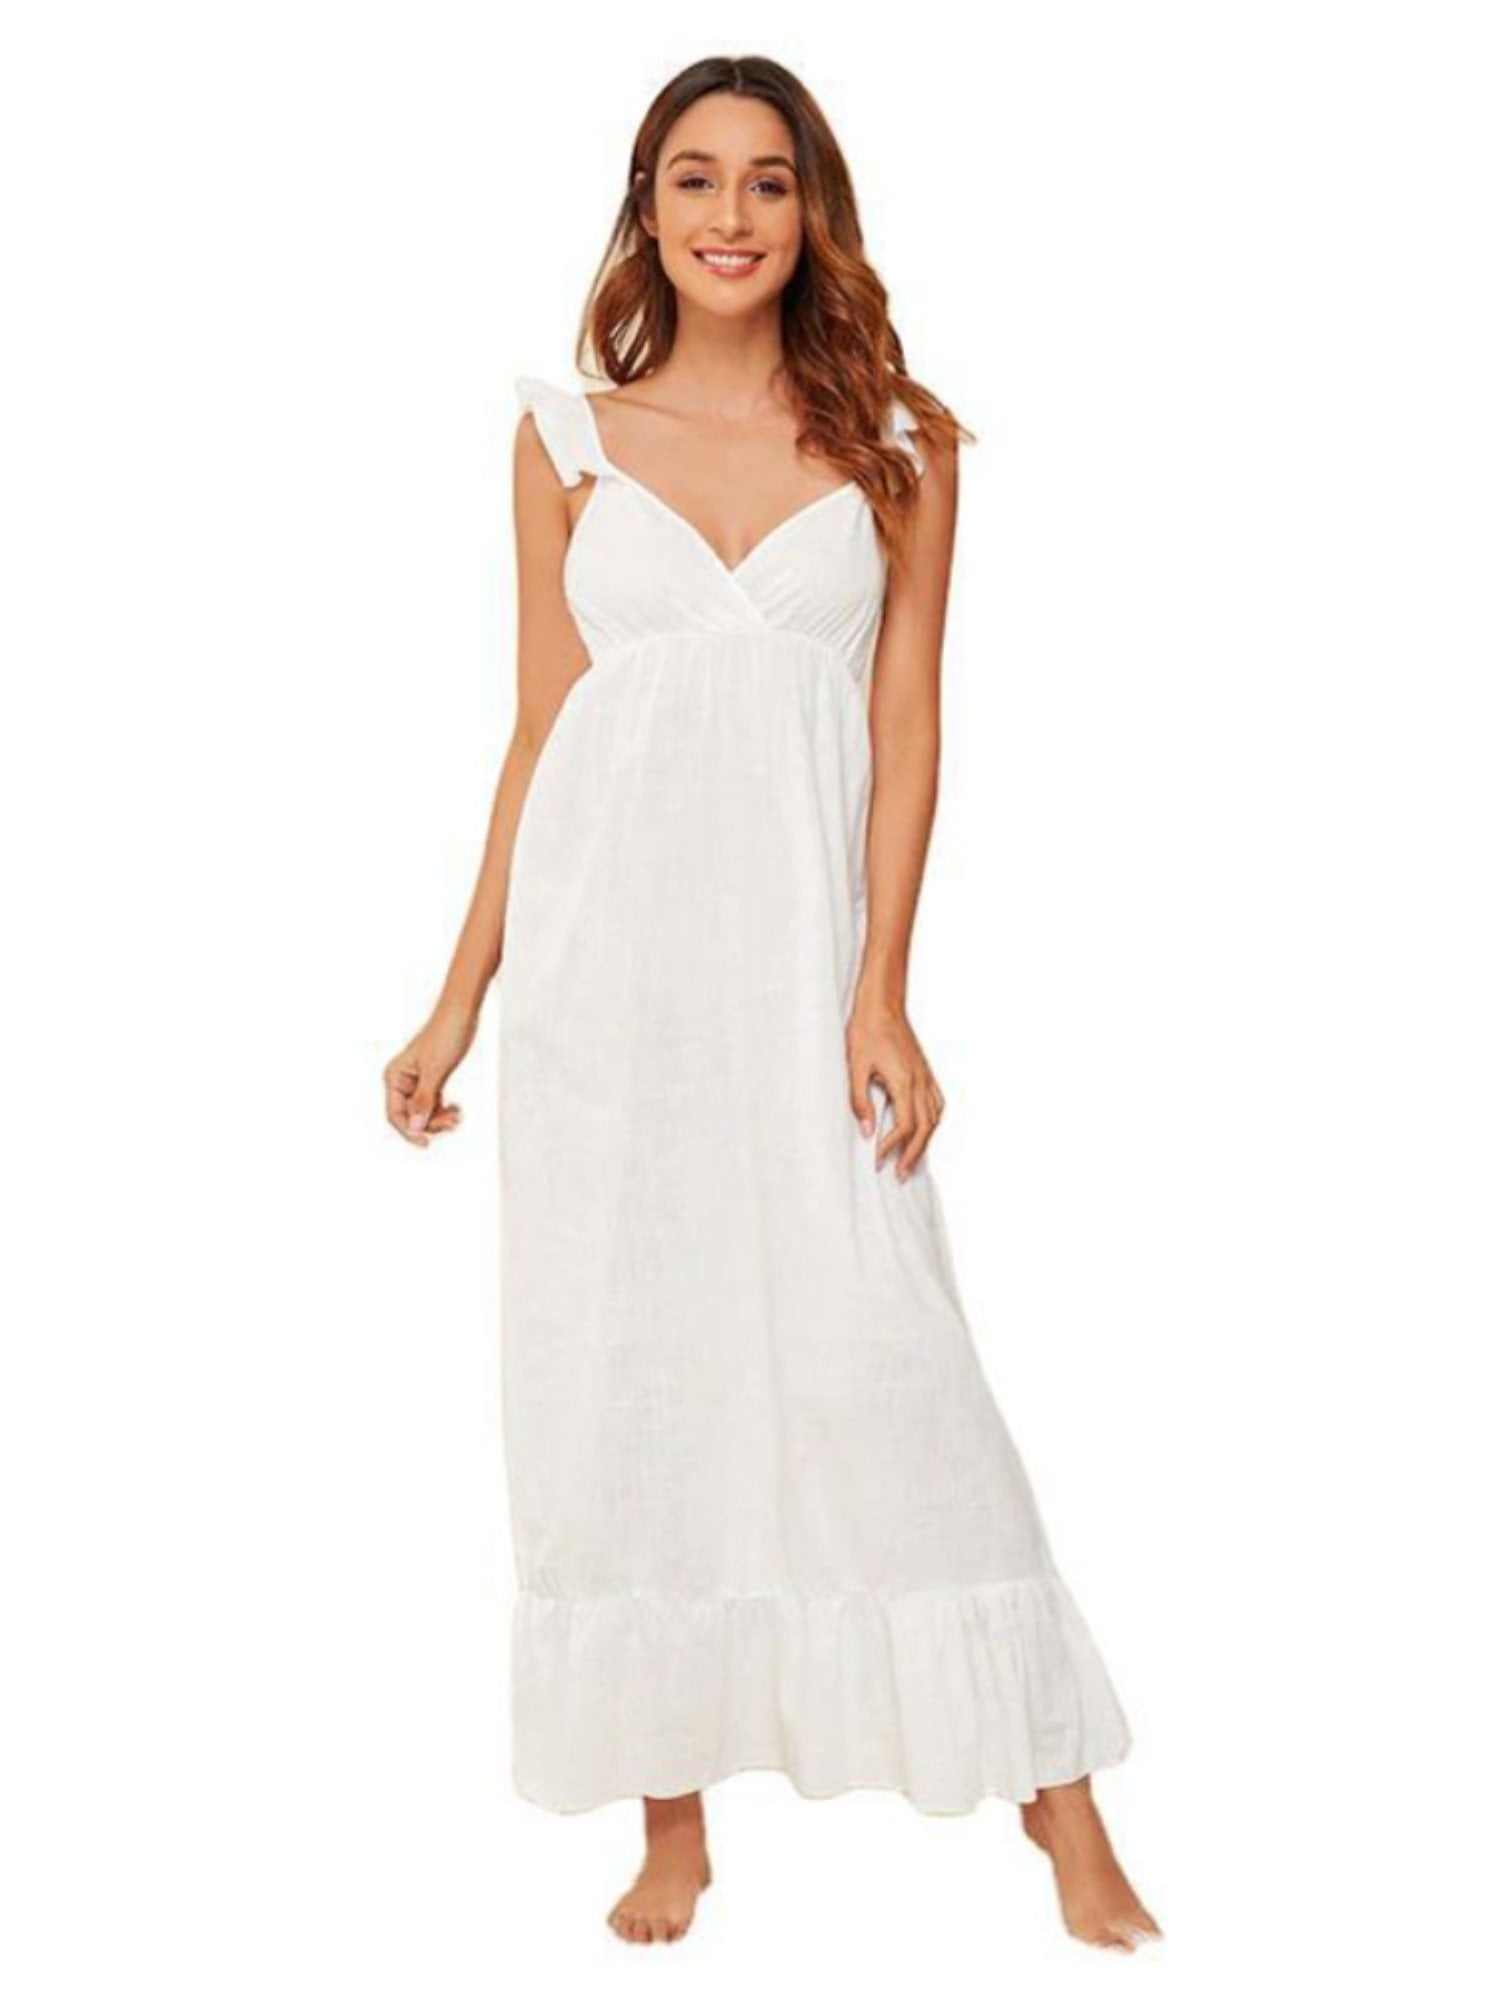 EFINNY Women's Cotton Sleeveless Nightgowns Deep V-neck Maxi Nightdress  Cute Ruffled Spaghetti Straps Sleep Dress